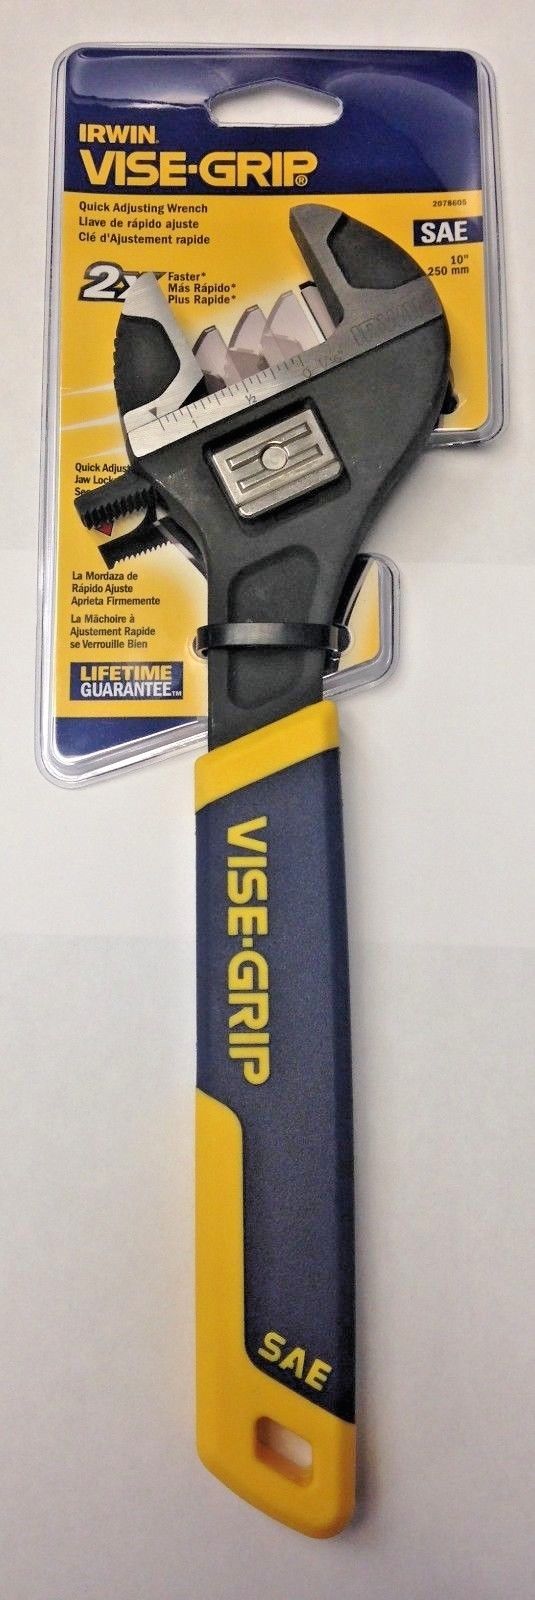 Irwin Vise-Grip 2078605 10" SAE Quick Adjusting Wrench